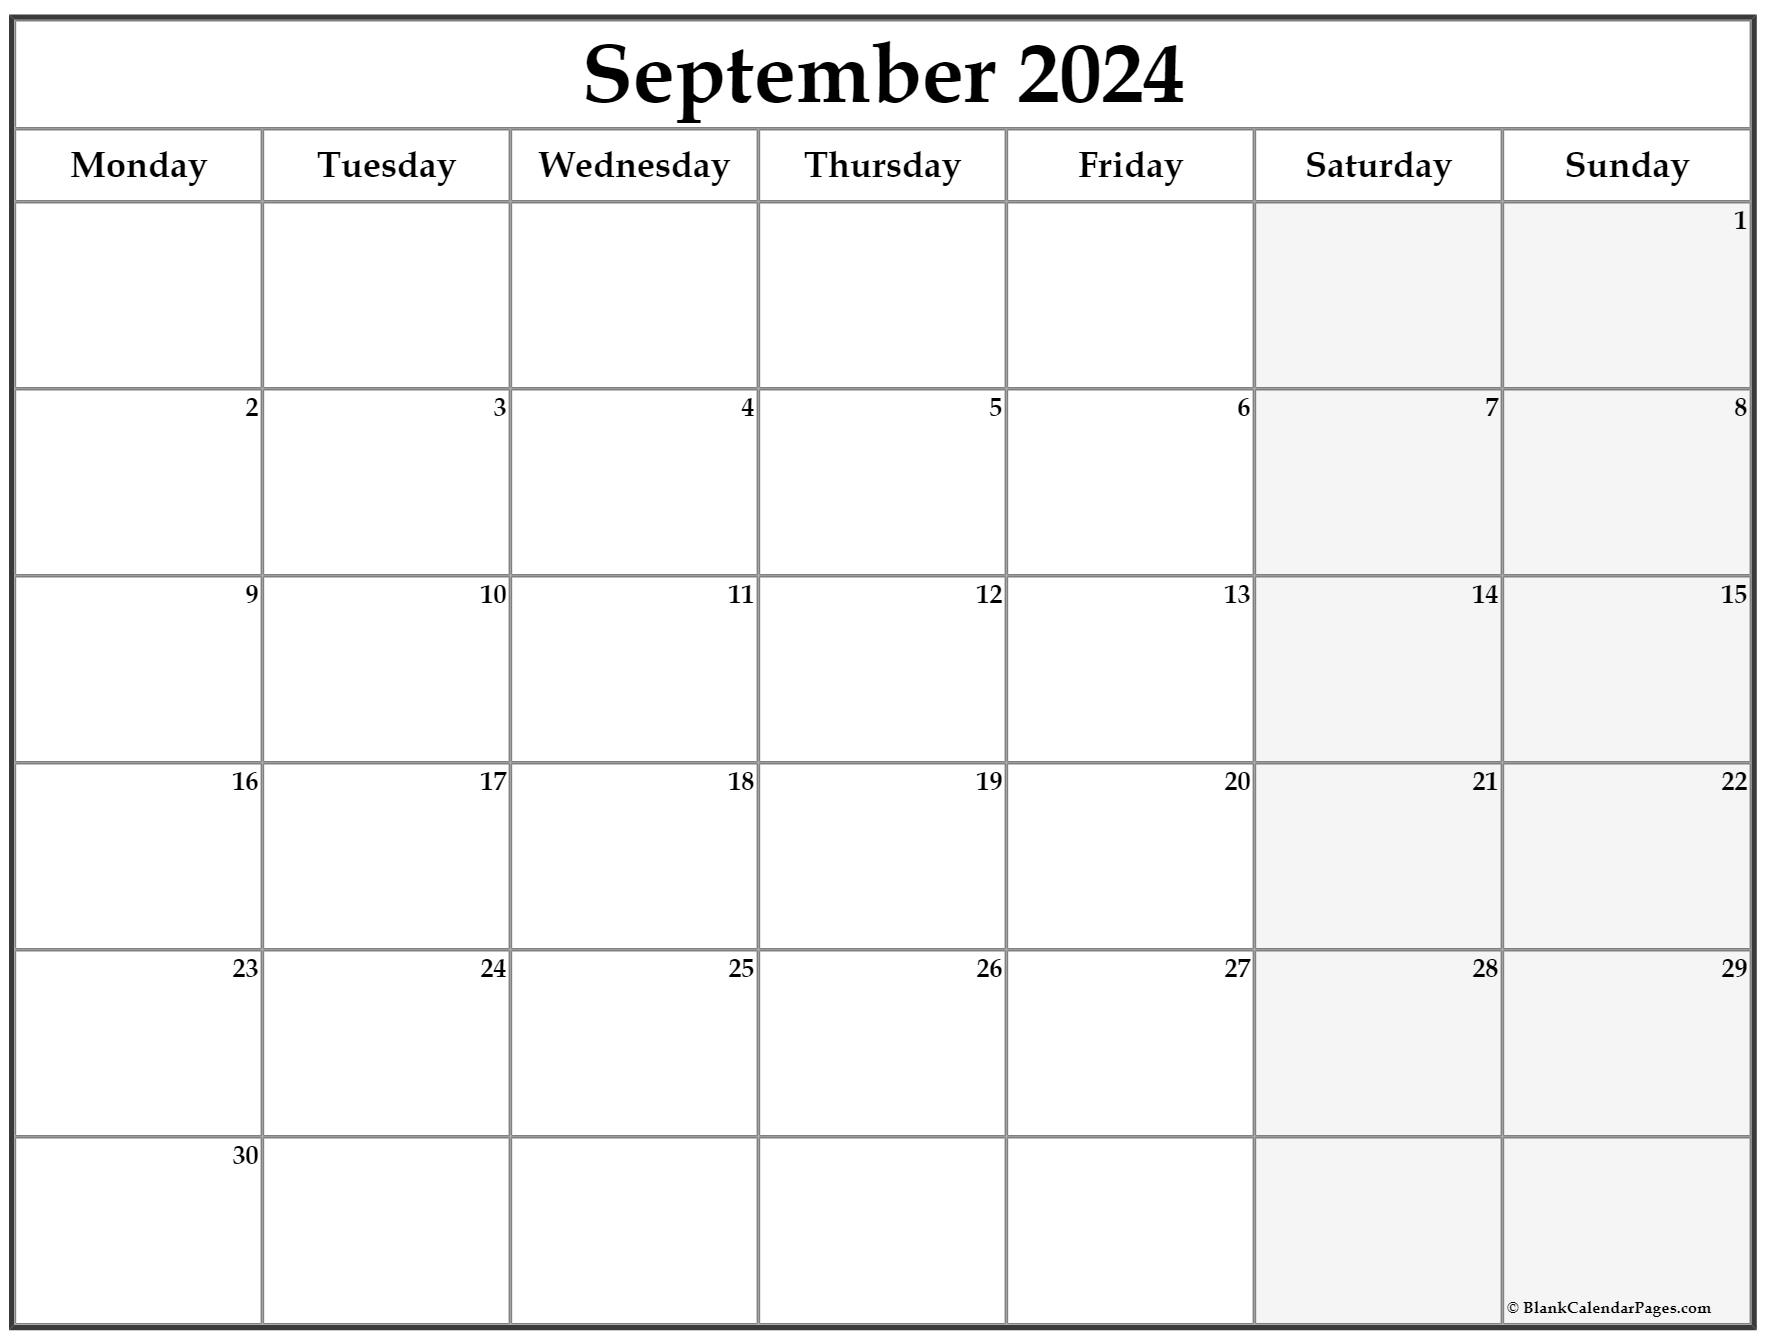 September 2020 Monday Calendar | Monday to Sunday